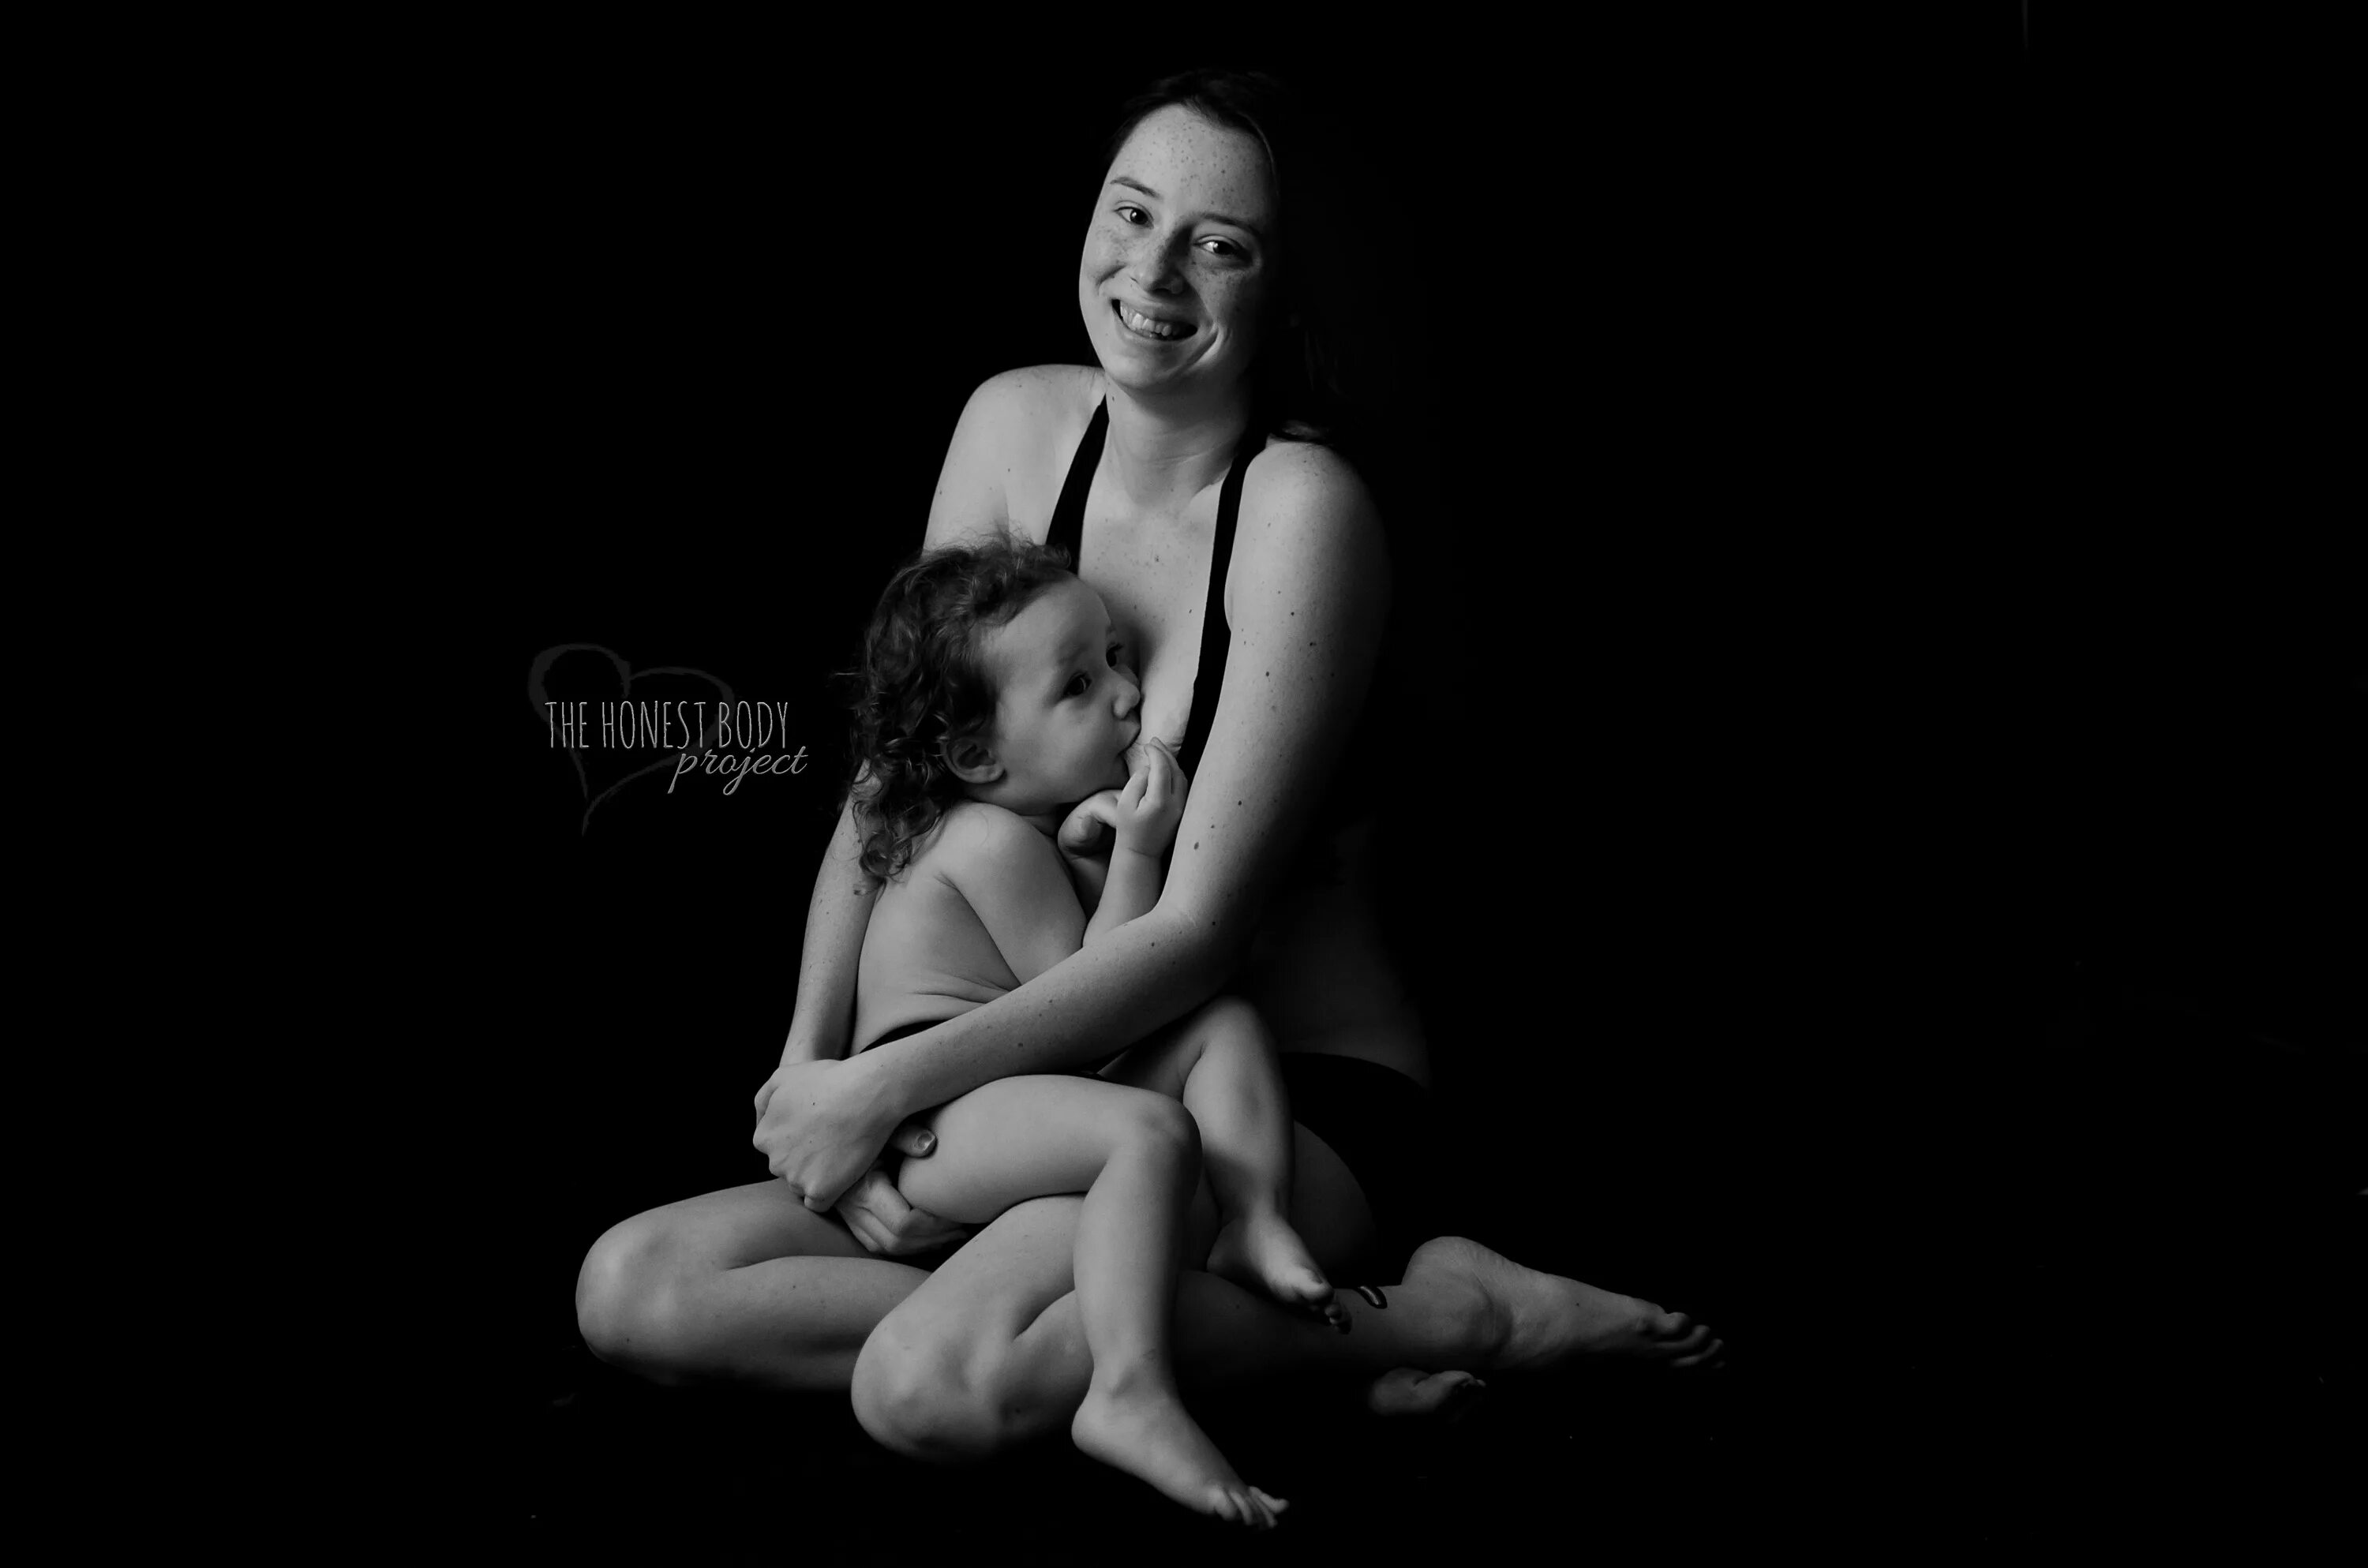 Матери показали тело. Фотопроект Натали Маккейн. Мама кормит ребенка. Фотосессия грудного вскармливания чб. Фотопроект честное тело.